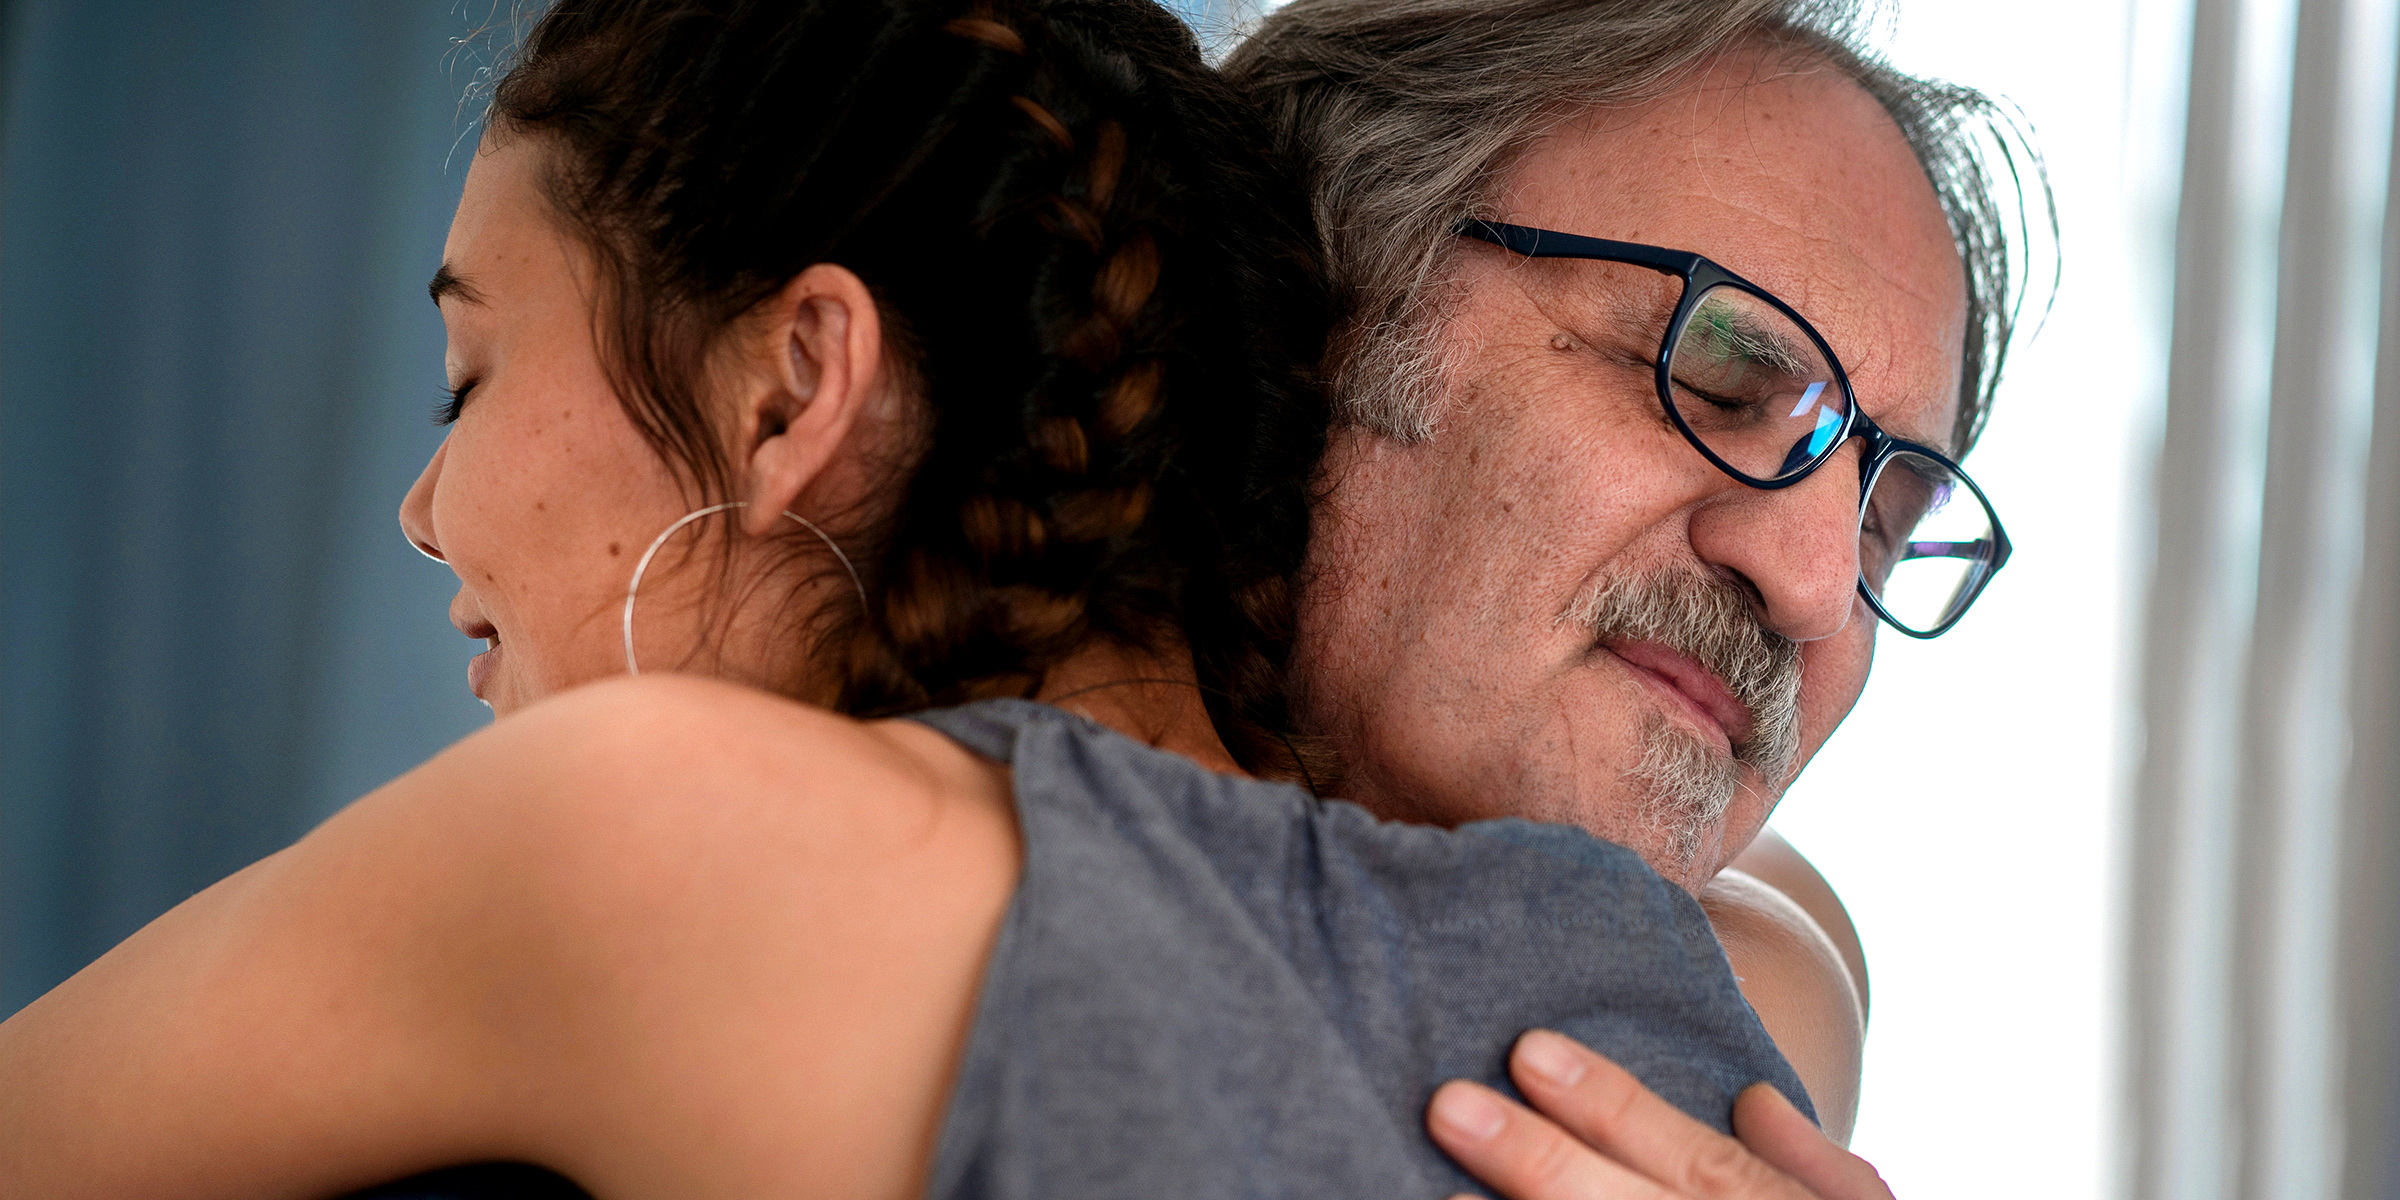 Hija abraza al padre | Foto: Shutterstock